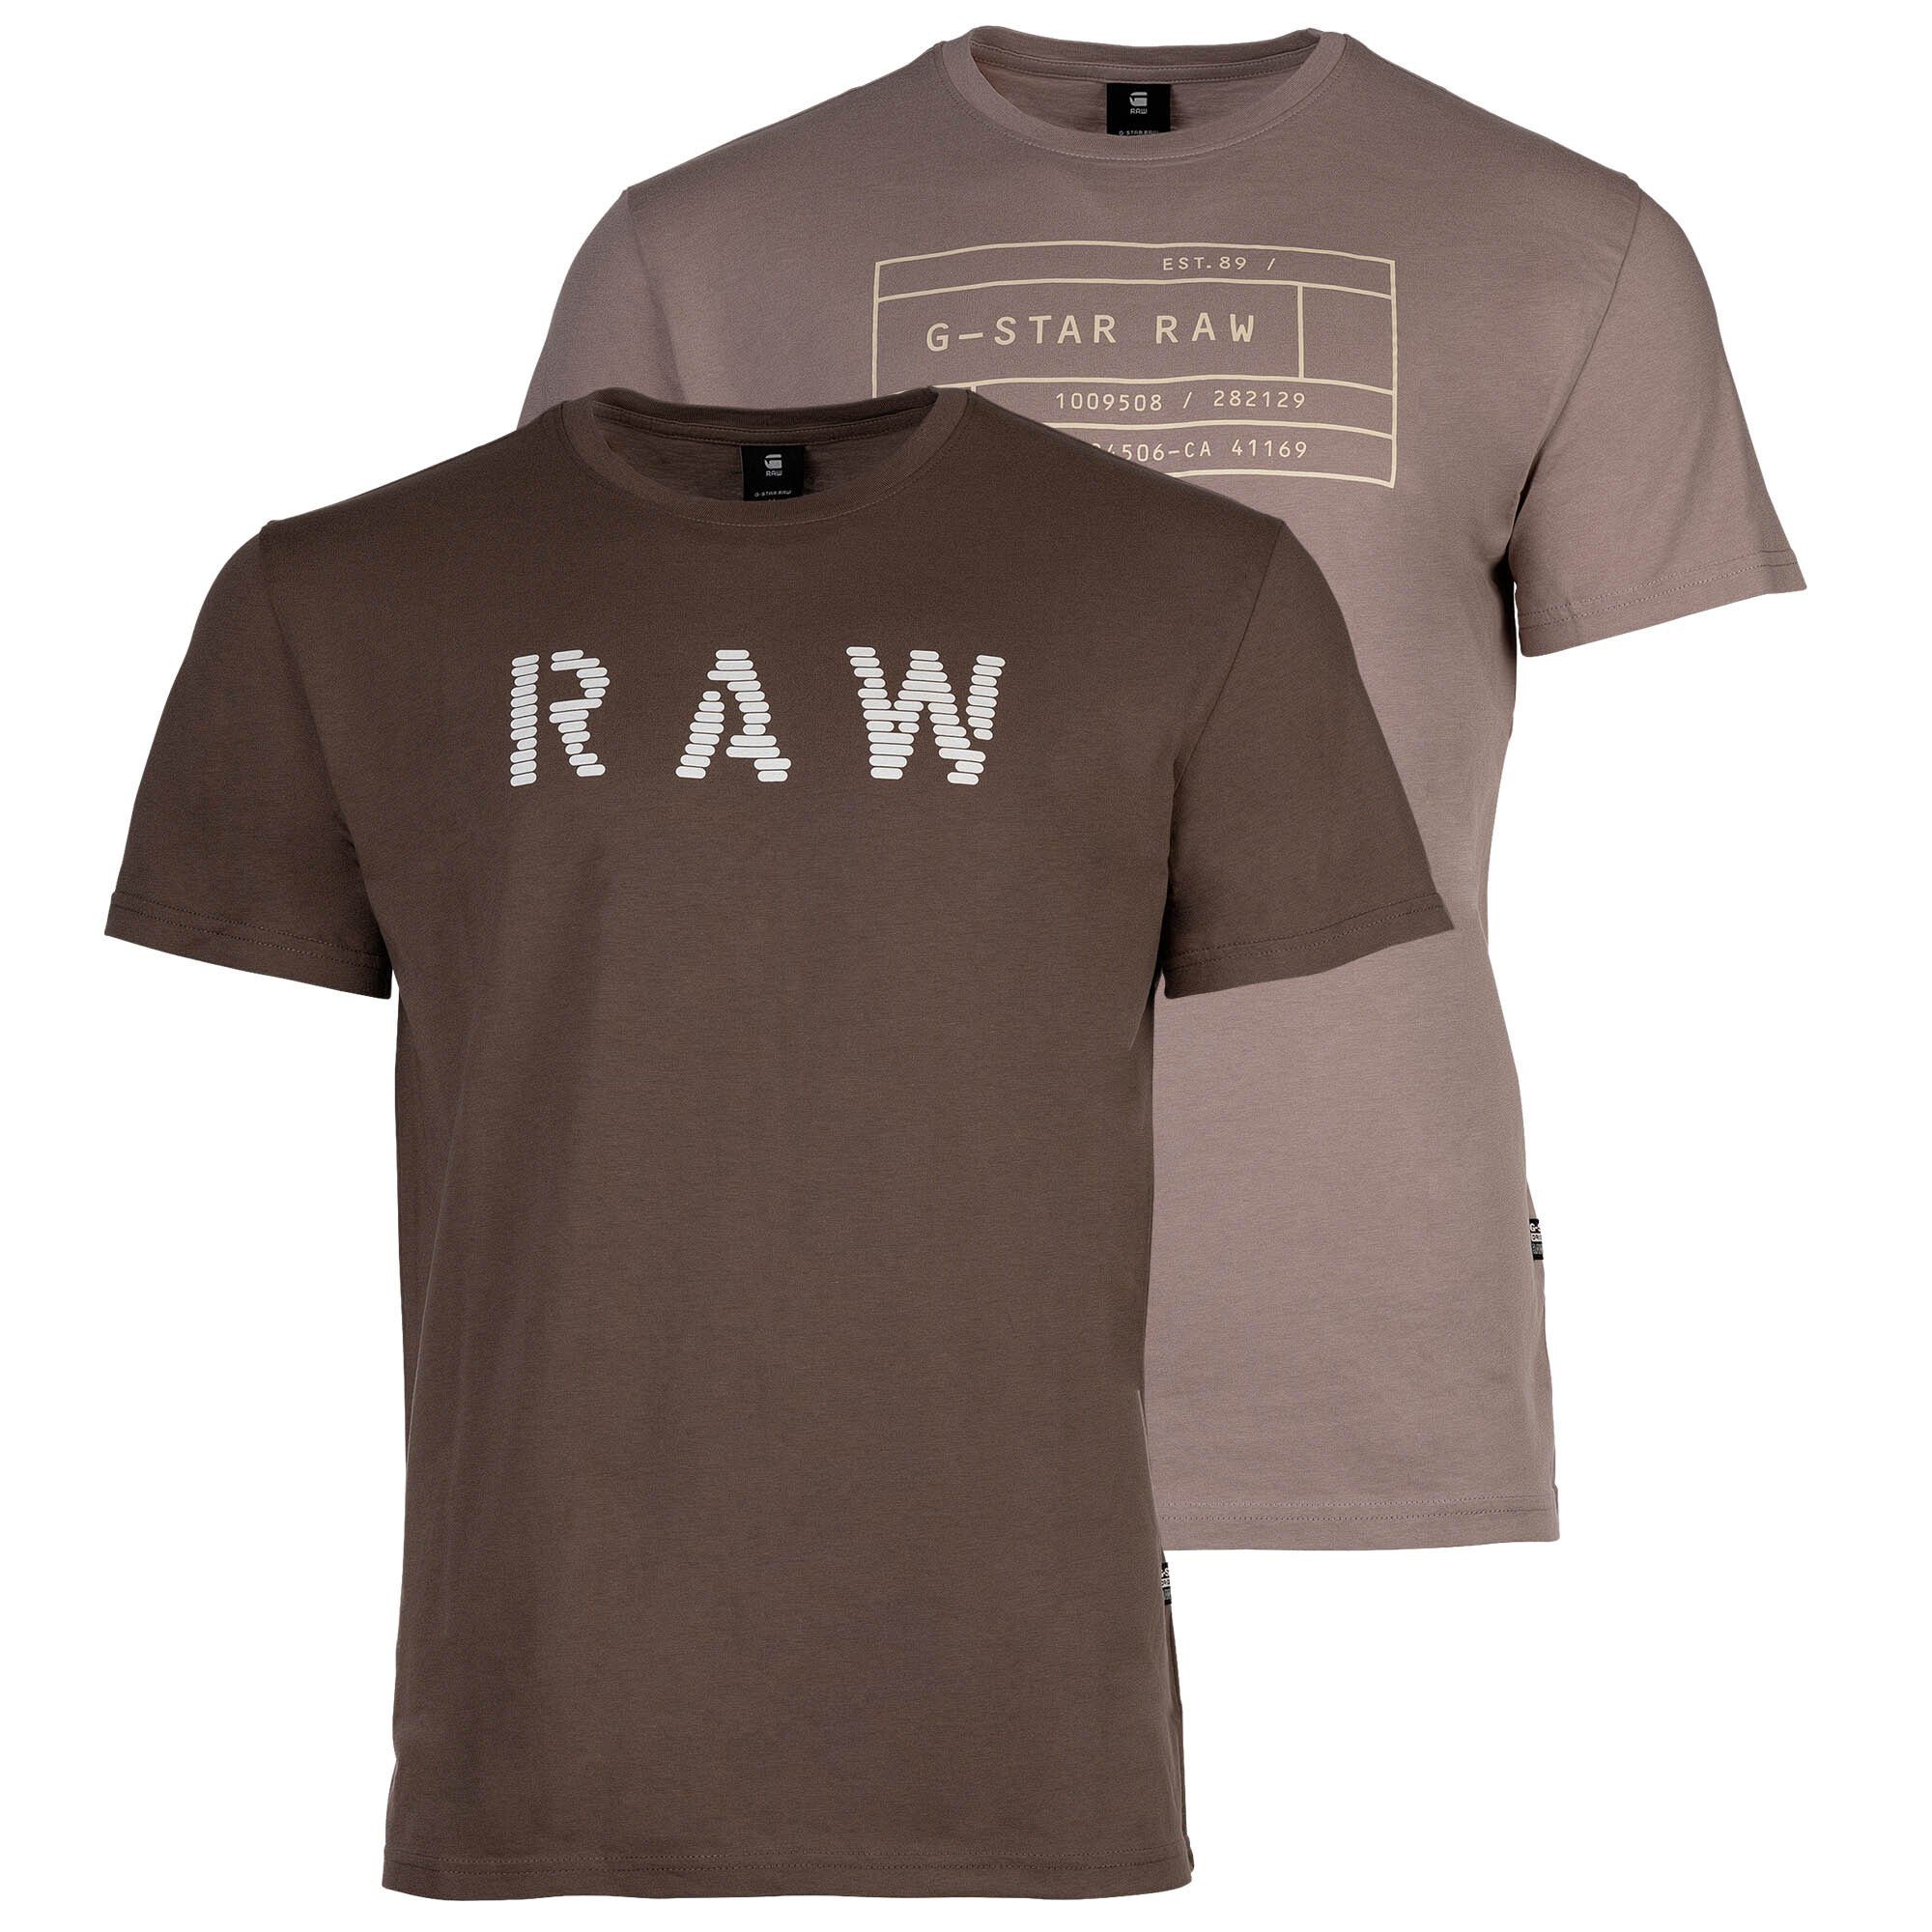 G-Star RAW T-Shirt Herren T-Shirt, 2er Pack - Graphic, Rundhals Grau/Braun | T-Shirts